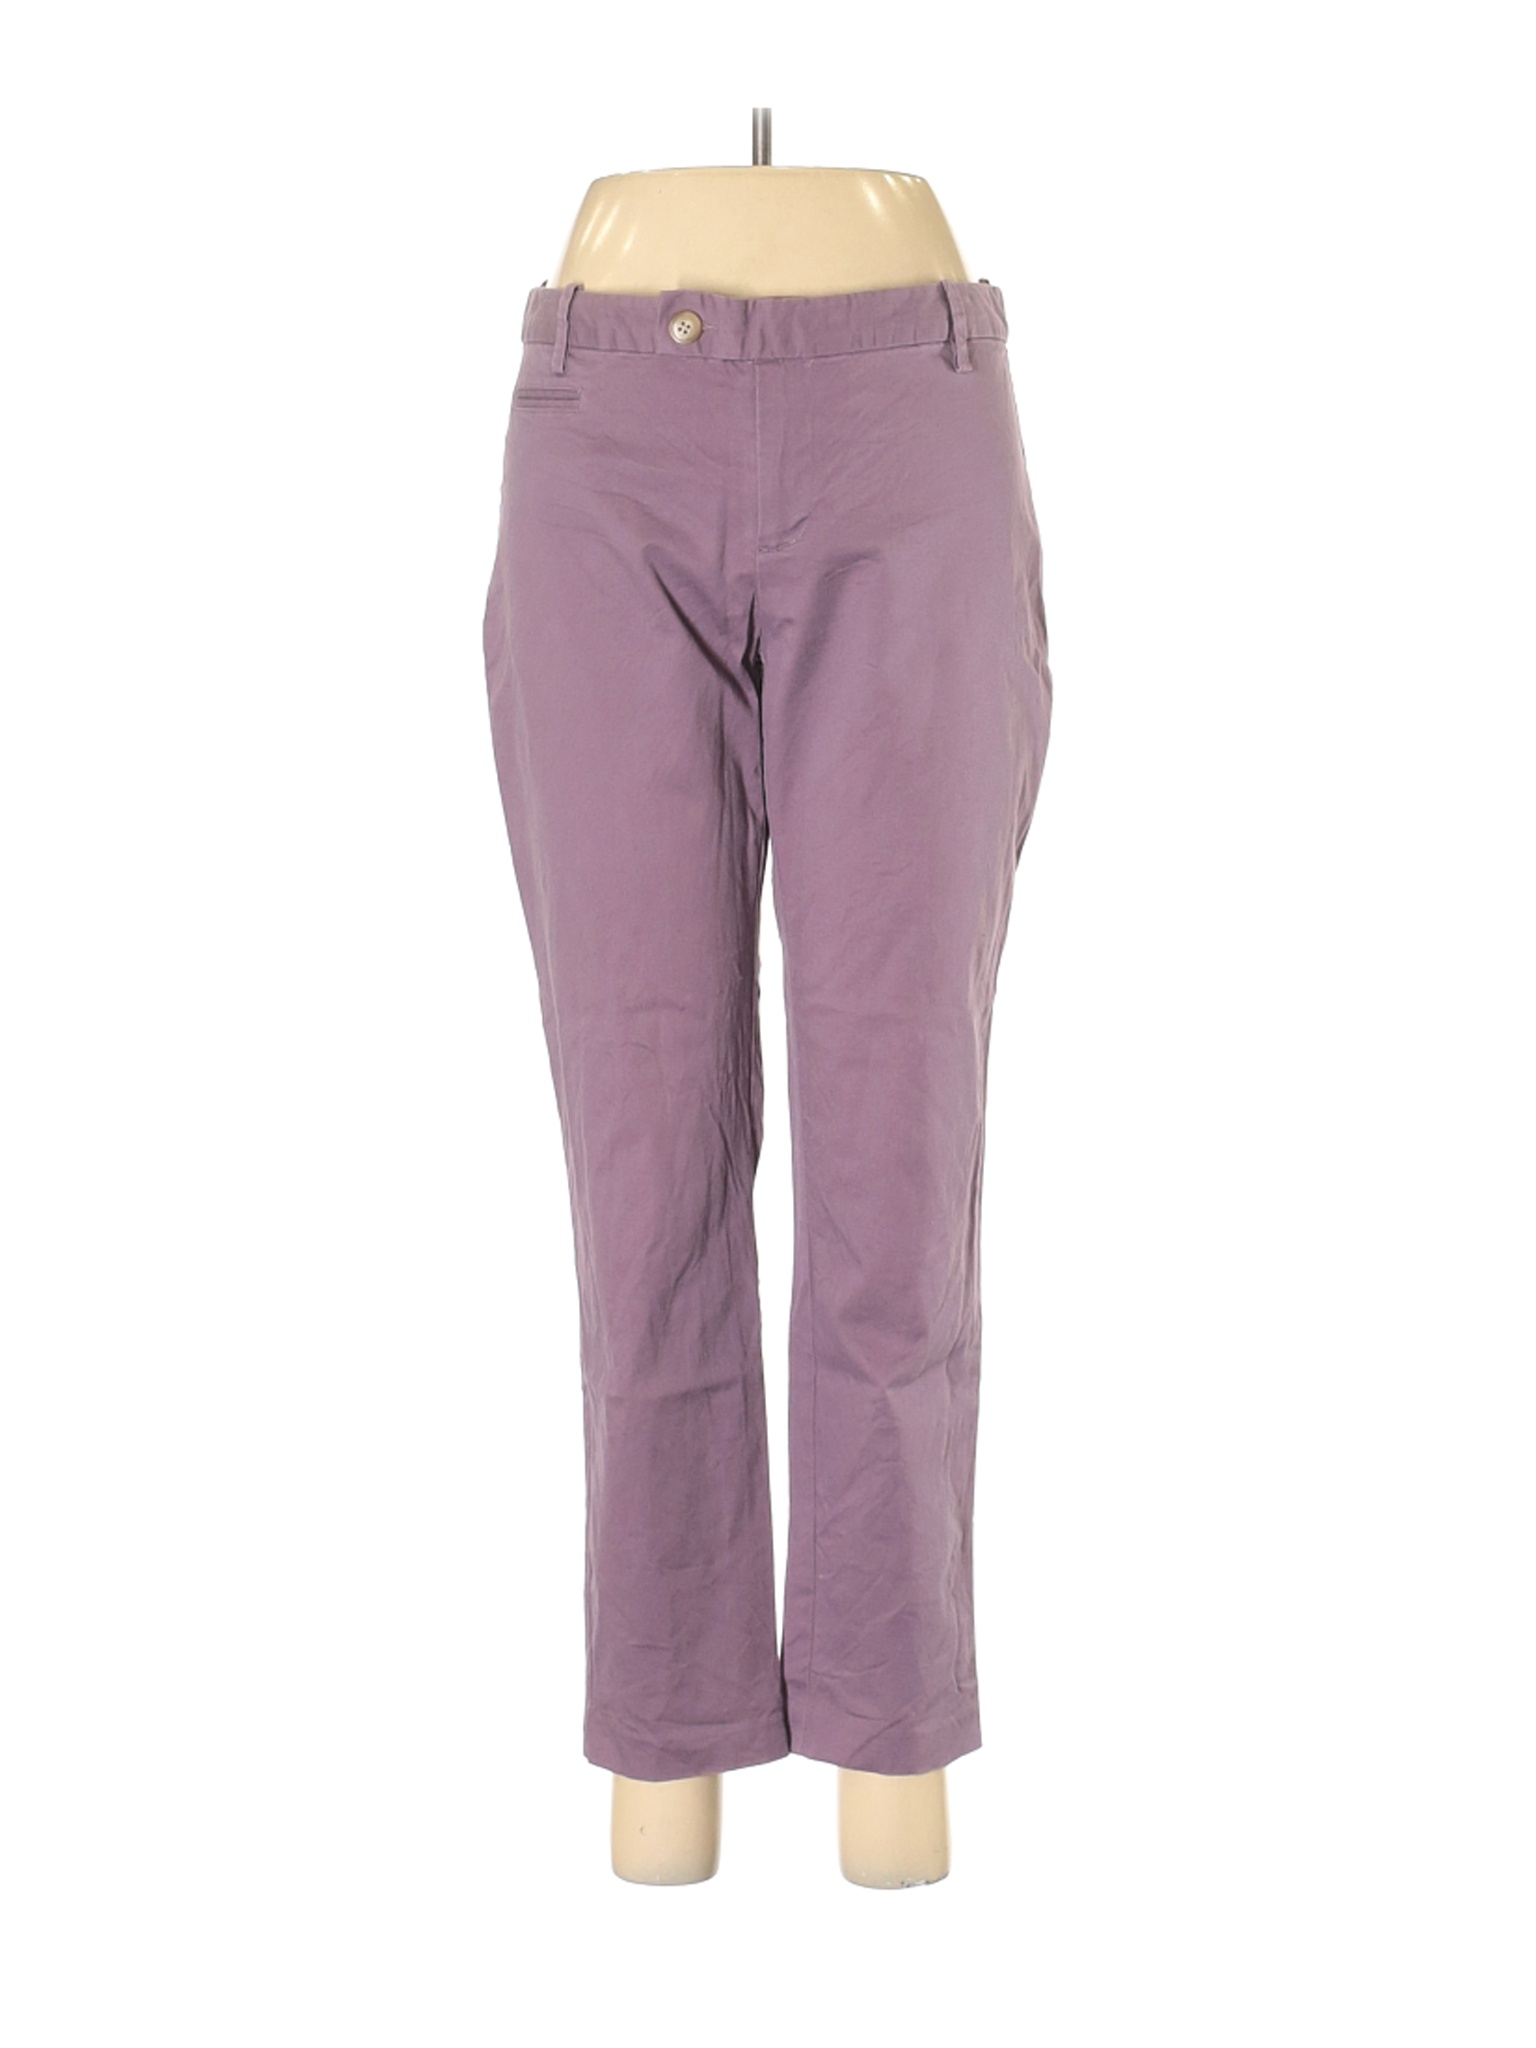 Gap Outlet Women Purple Khakis 8 | eBay